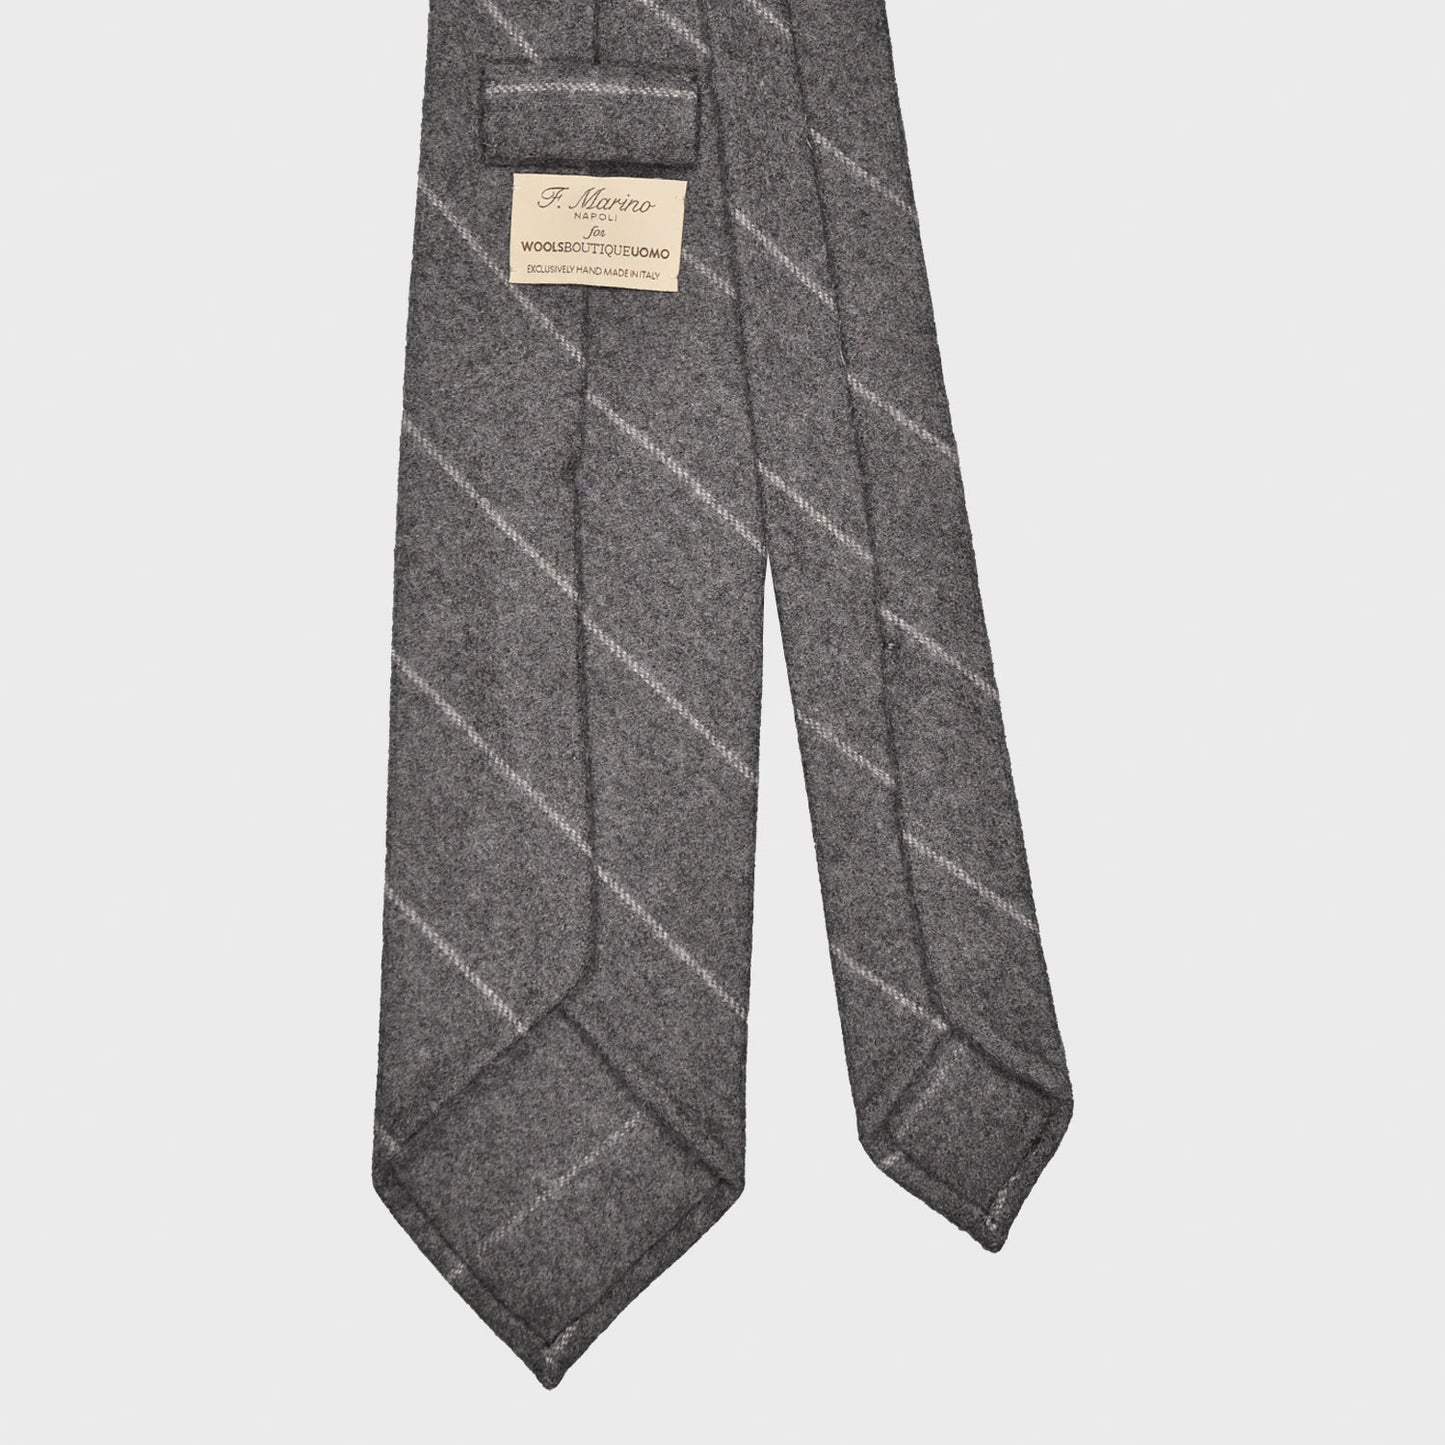 F.Marino Regimental Flannel Wool Tie 3 Folds Smoke Grey